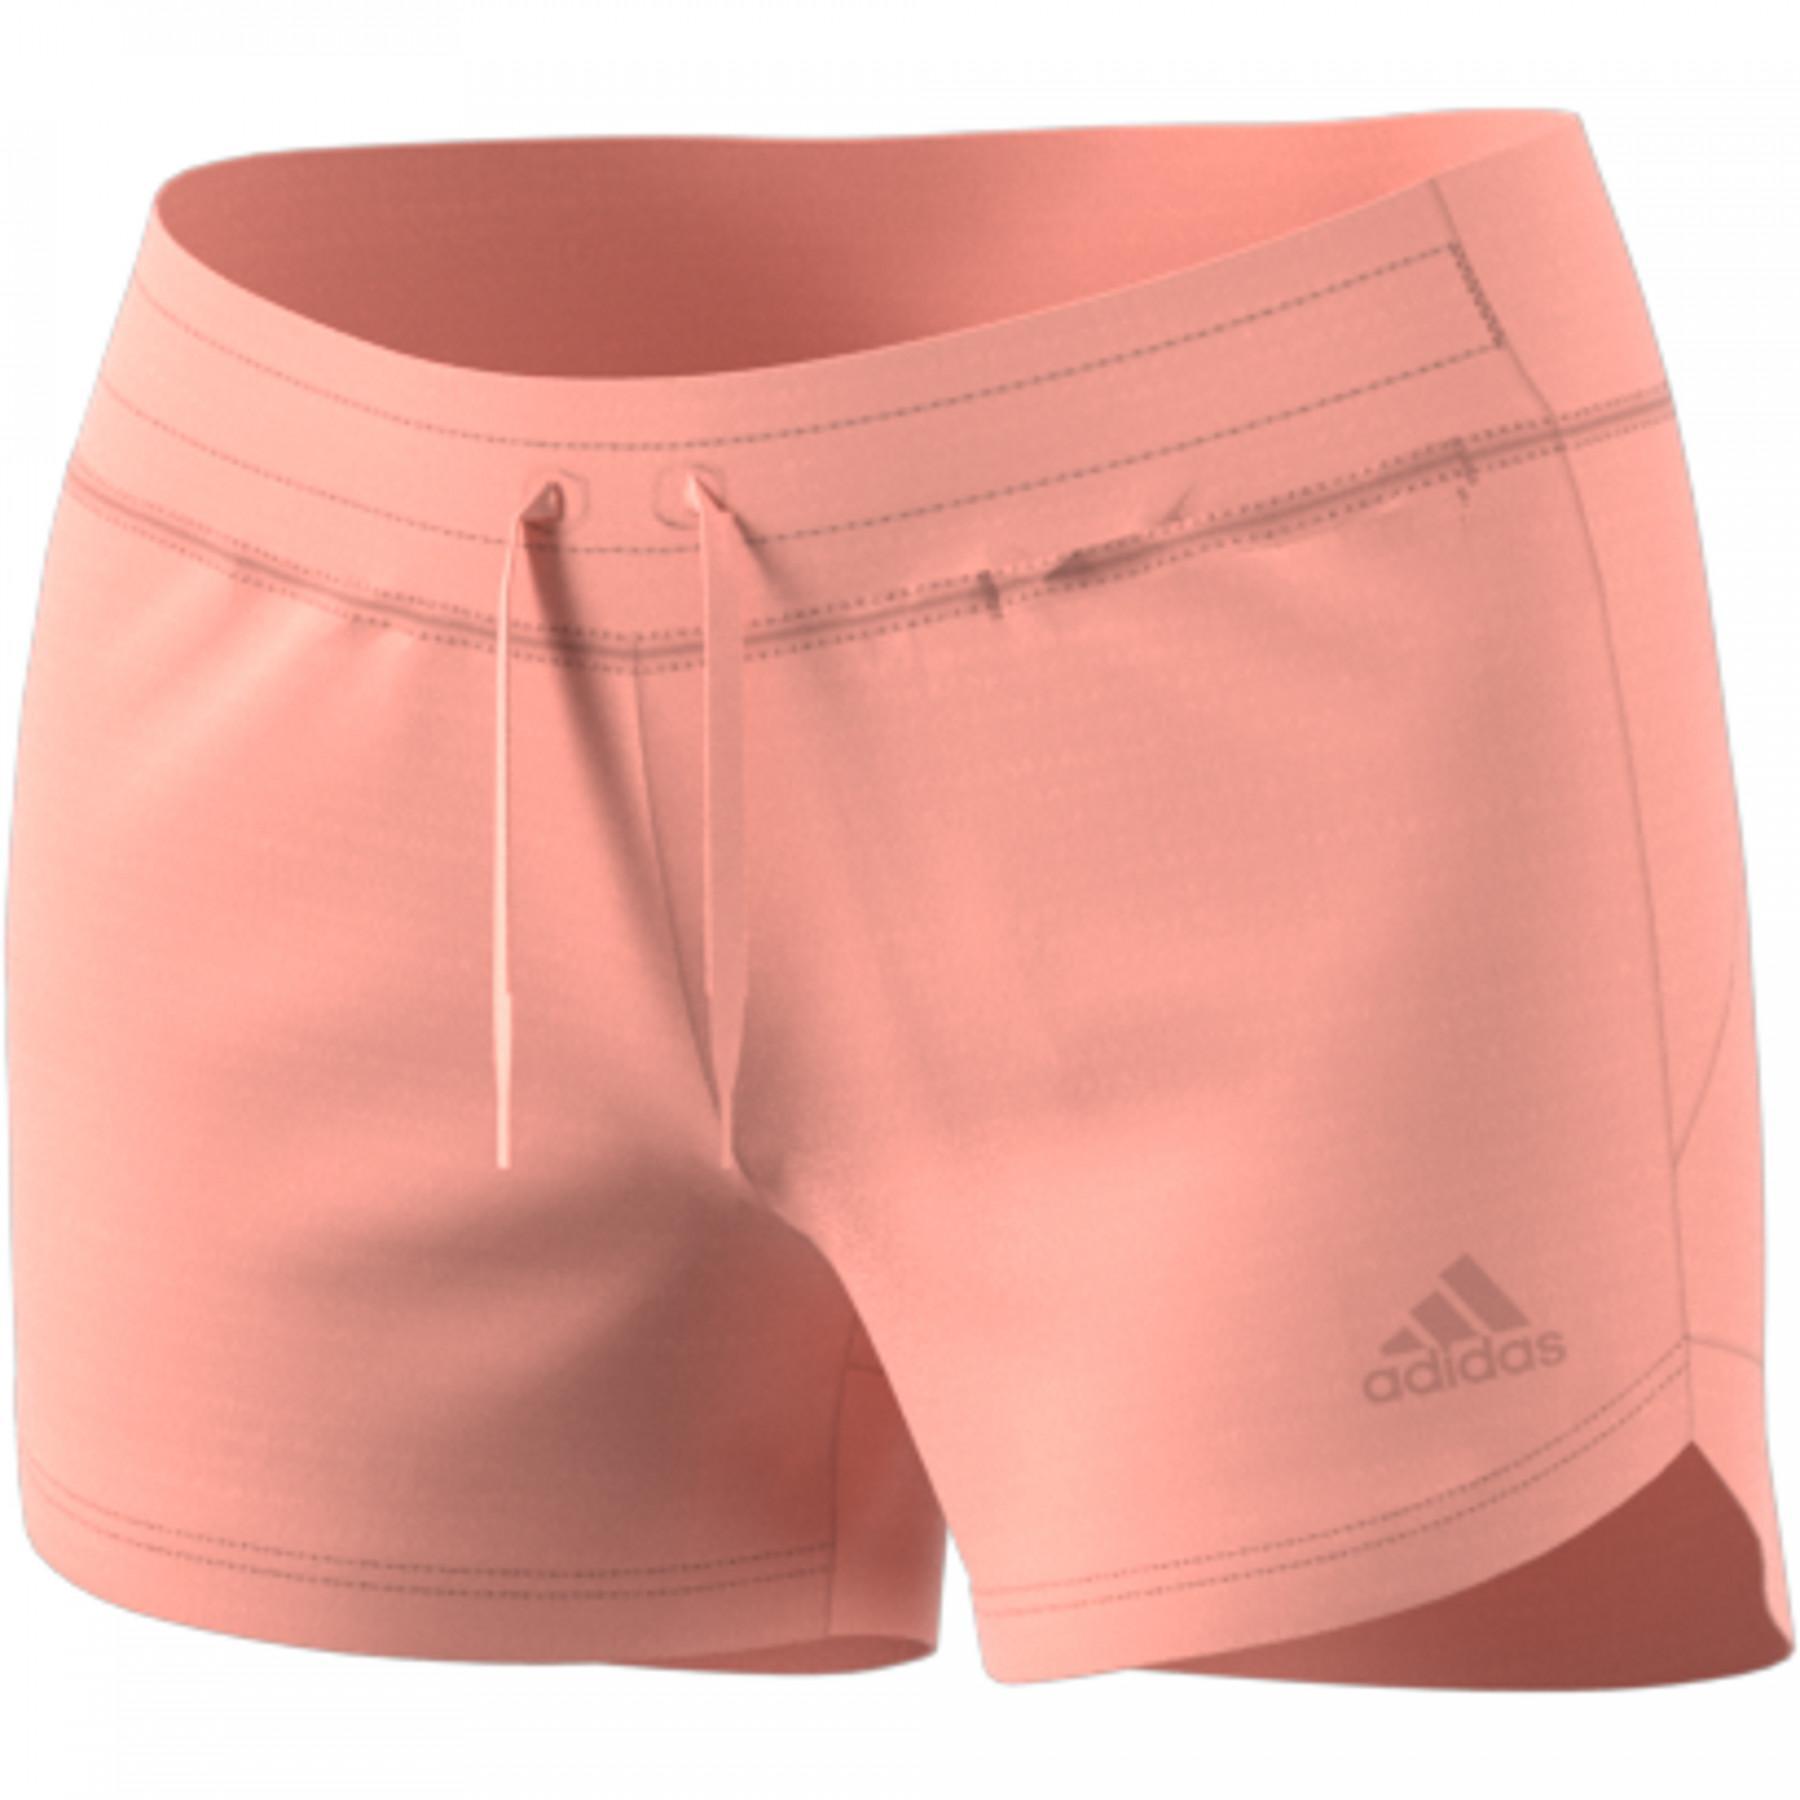 Women's shorts adidas ID Mélange